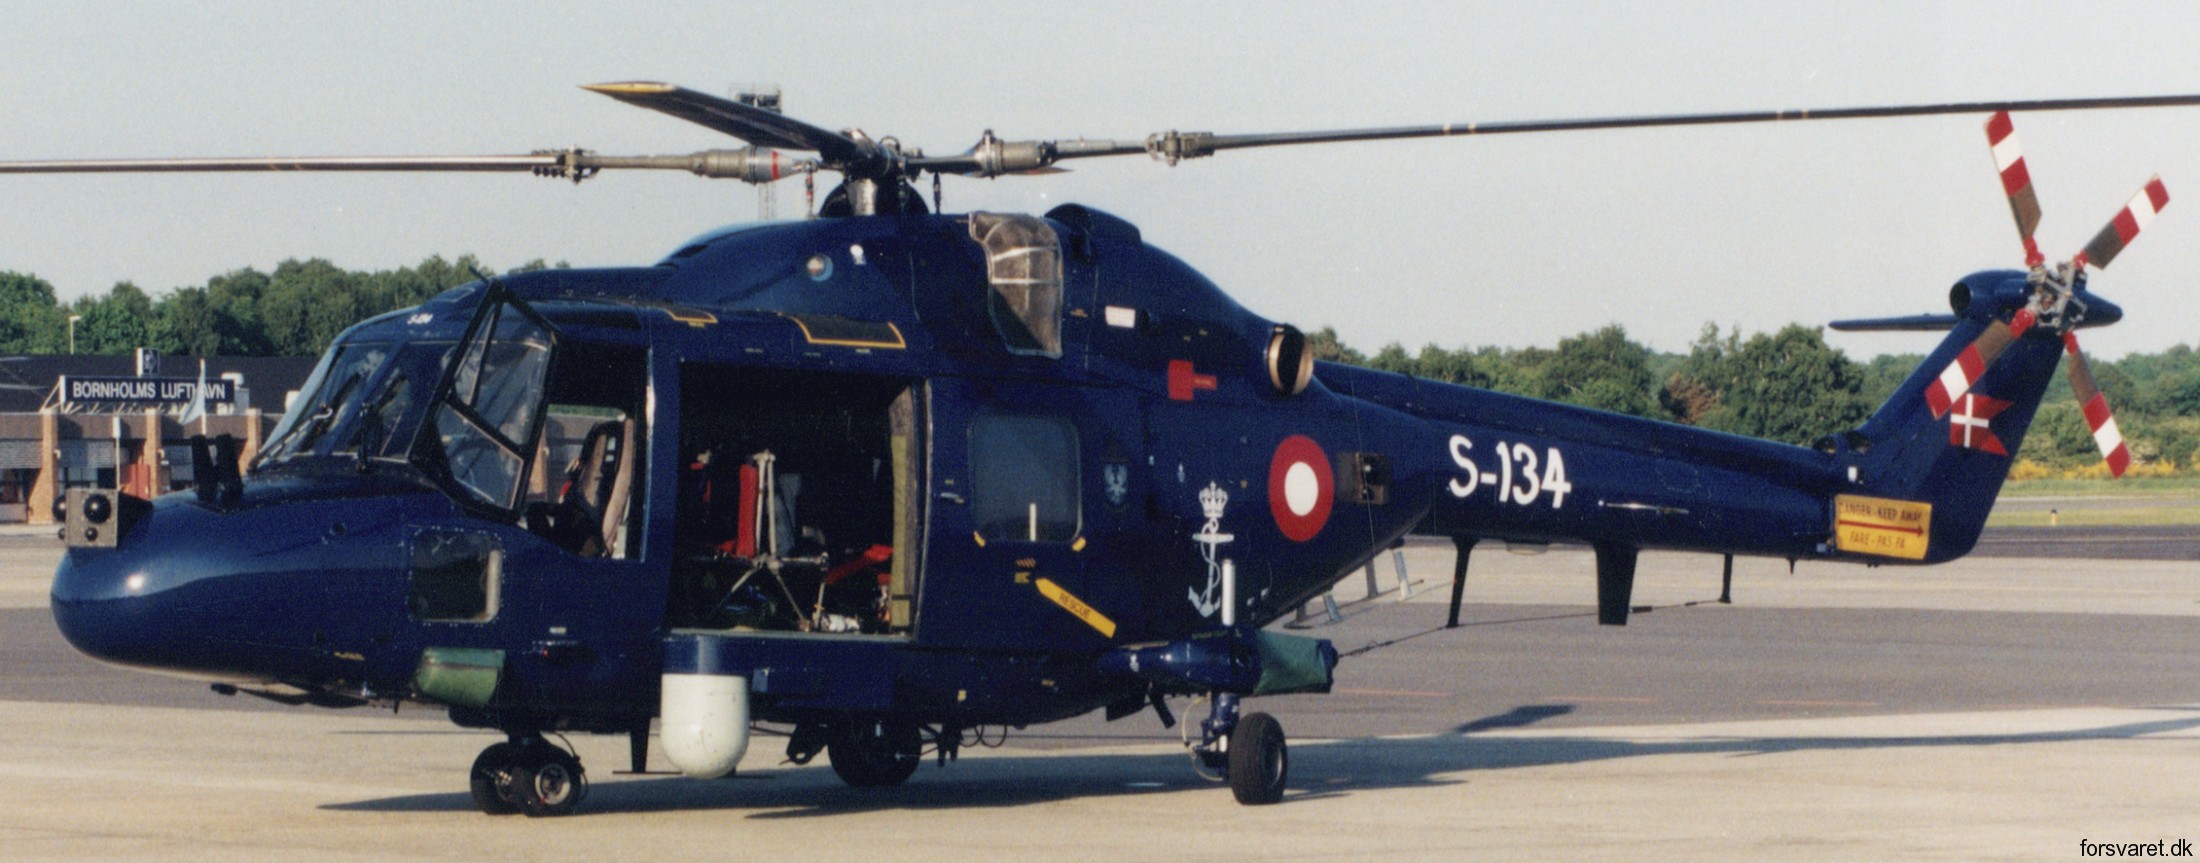 lynx mk.80 mk.90b helicopter westland royal danish navy air force kongelige danske marine flyvevabnet s-134 12